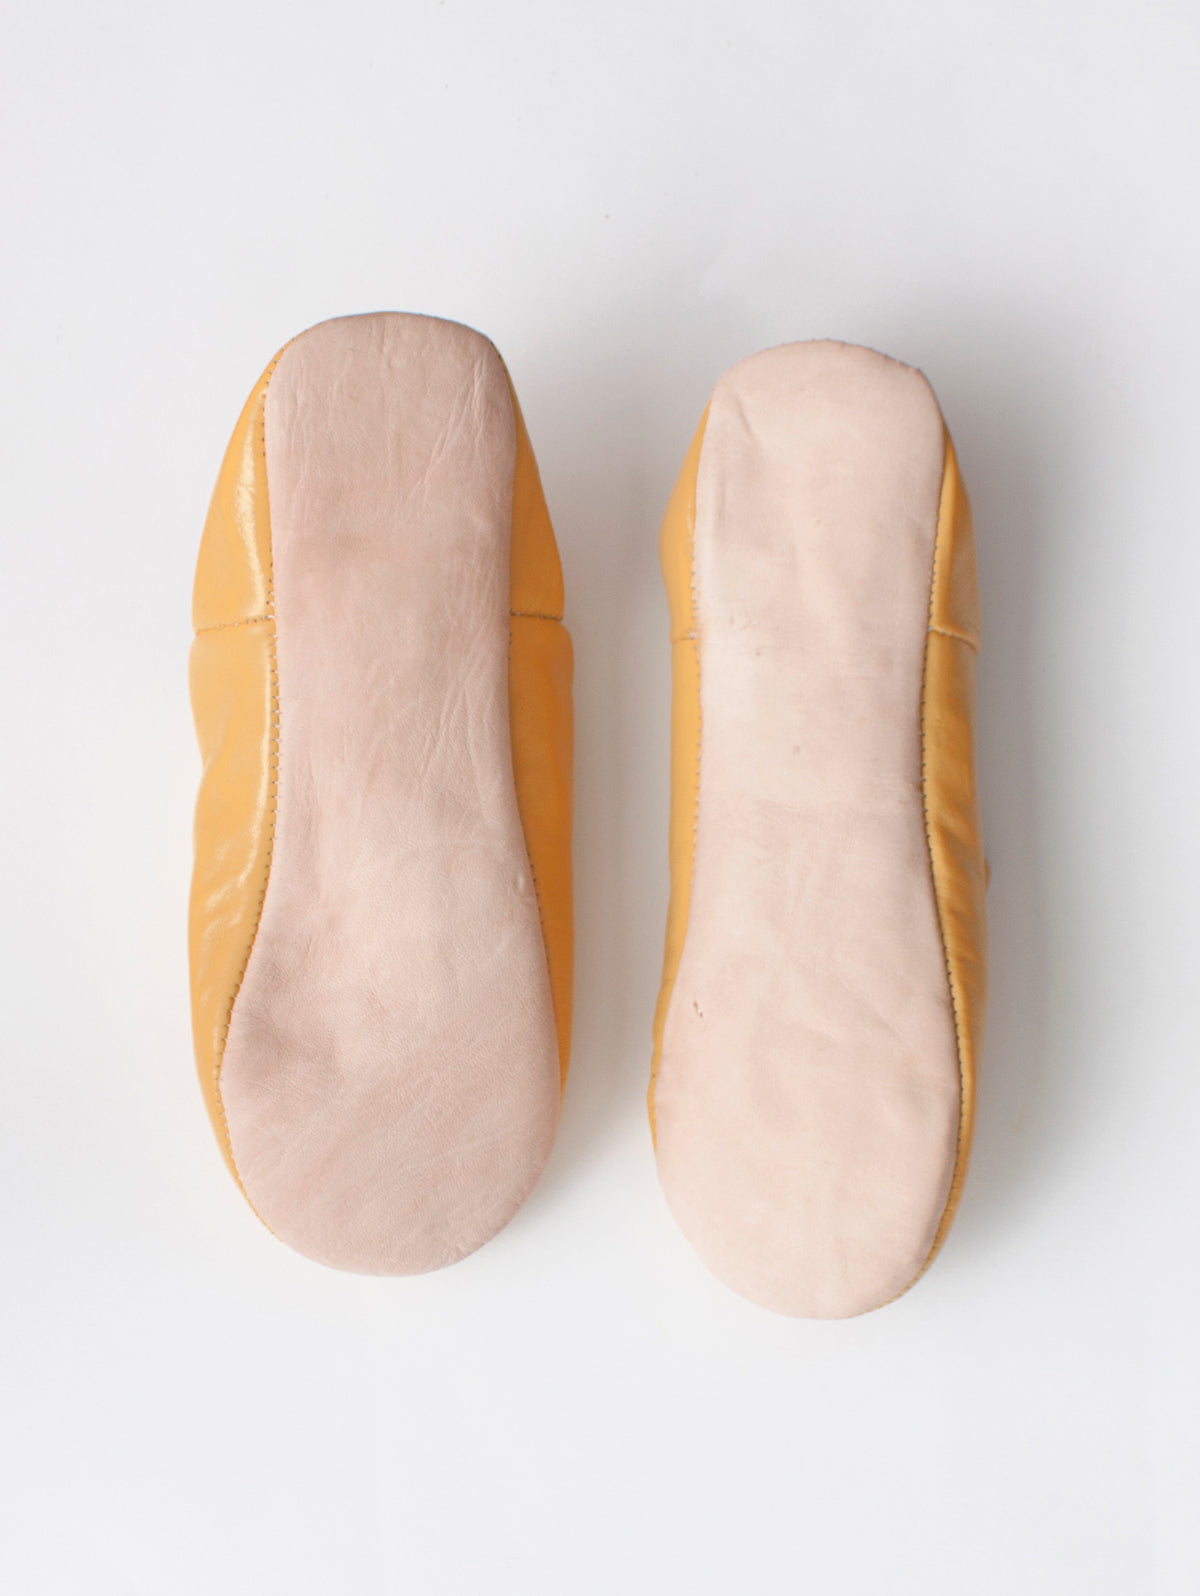 Moroccan Babouche Basic Slippers, Ochre